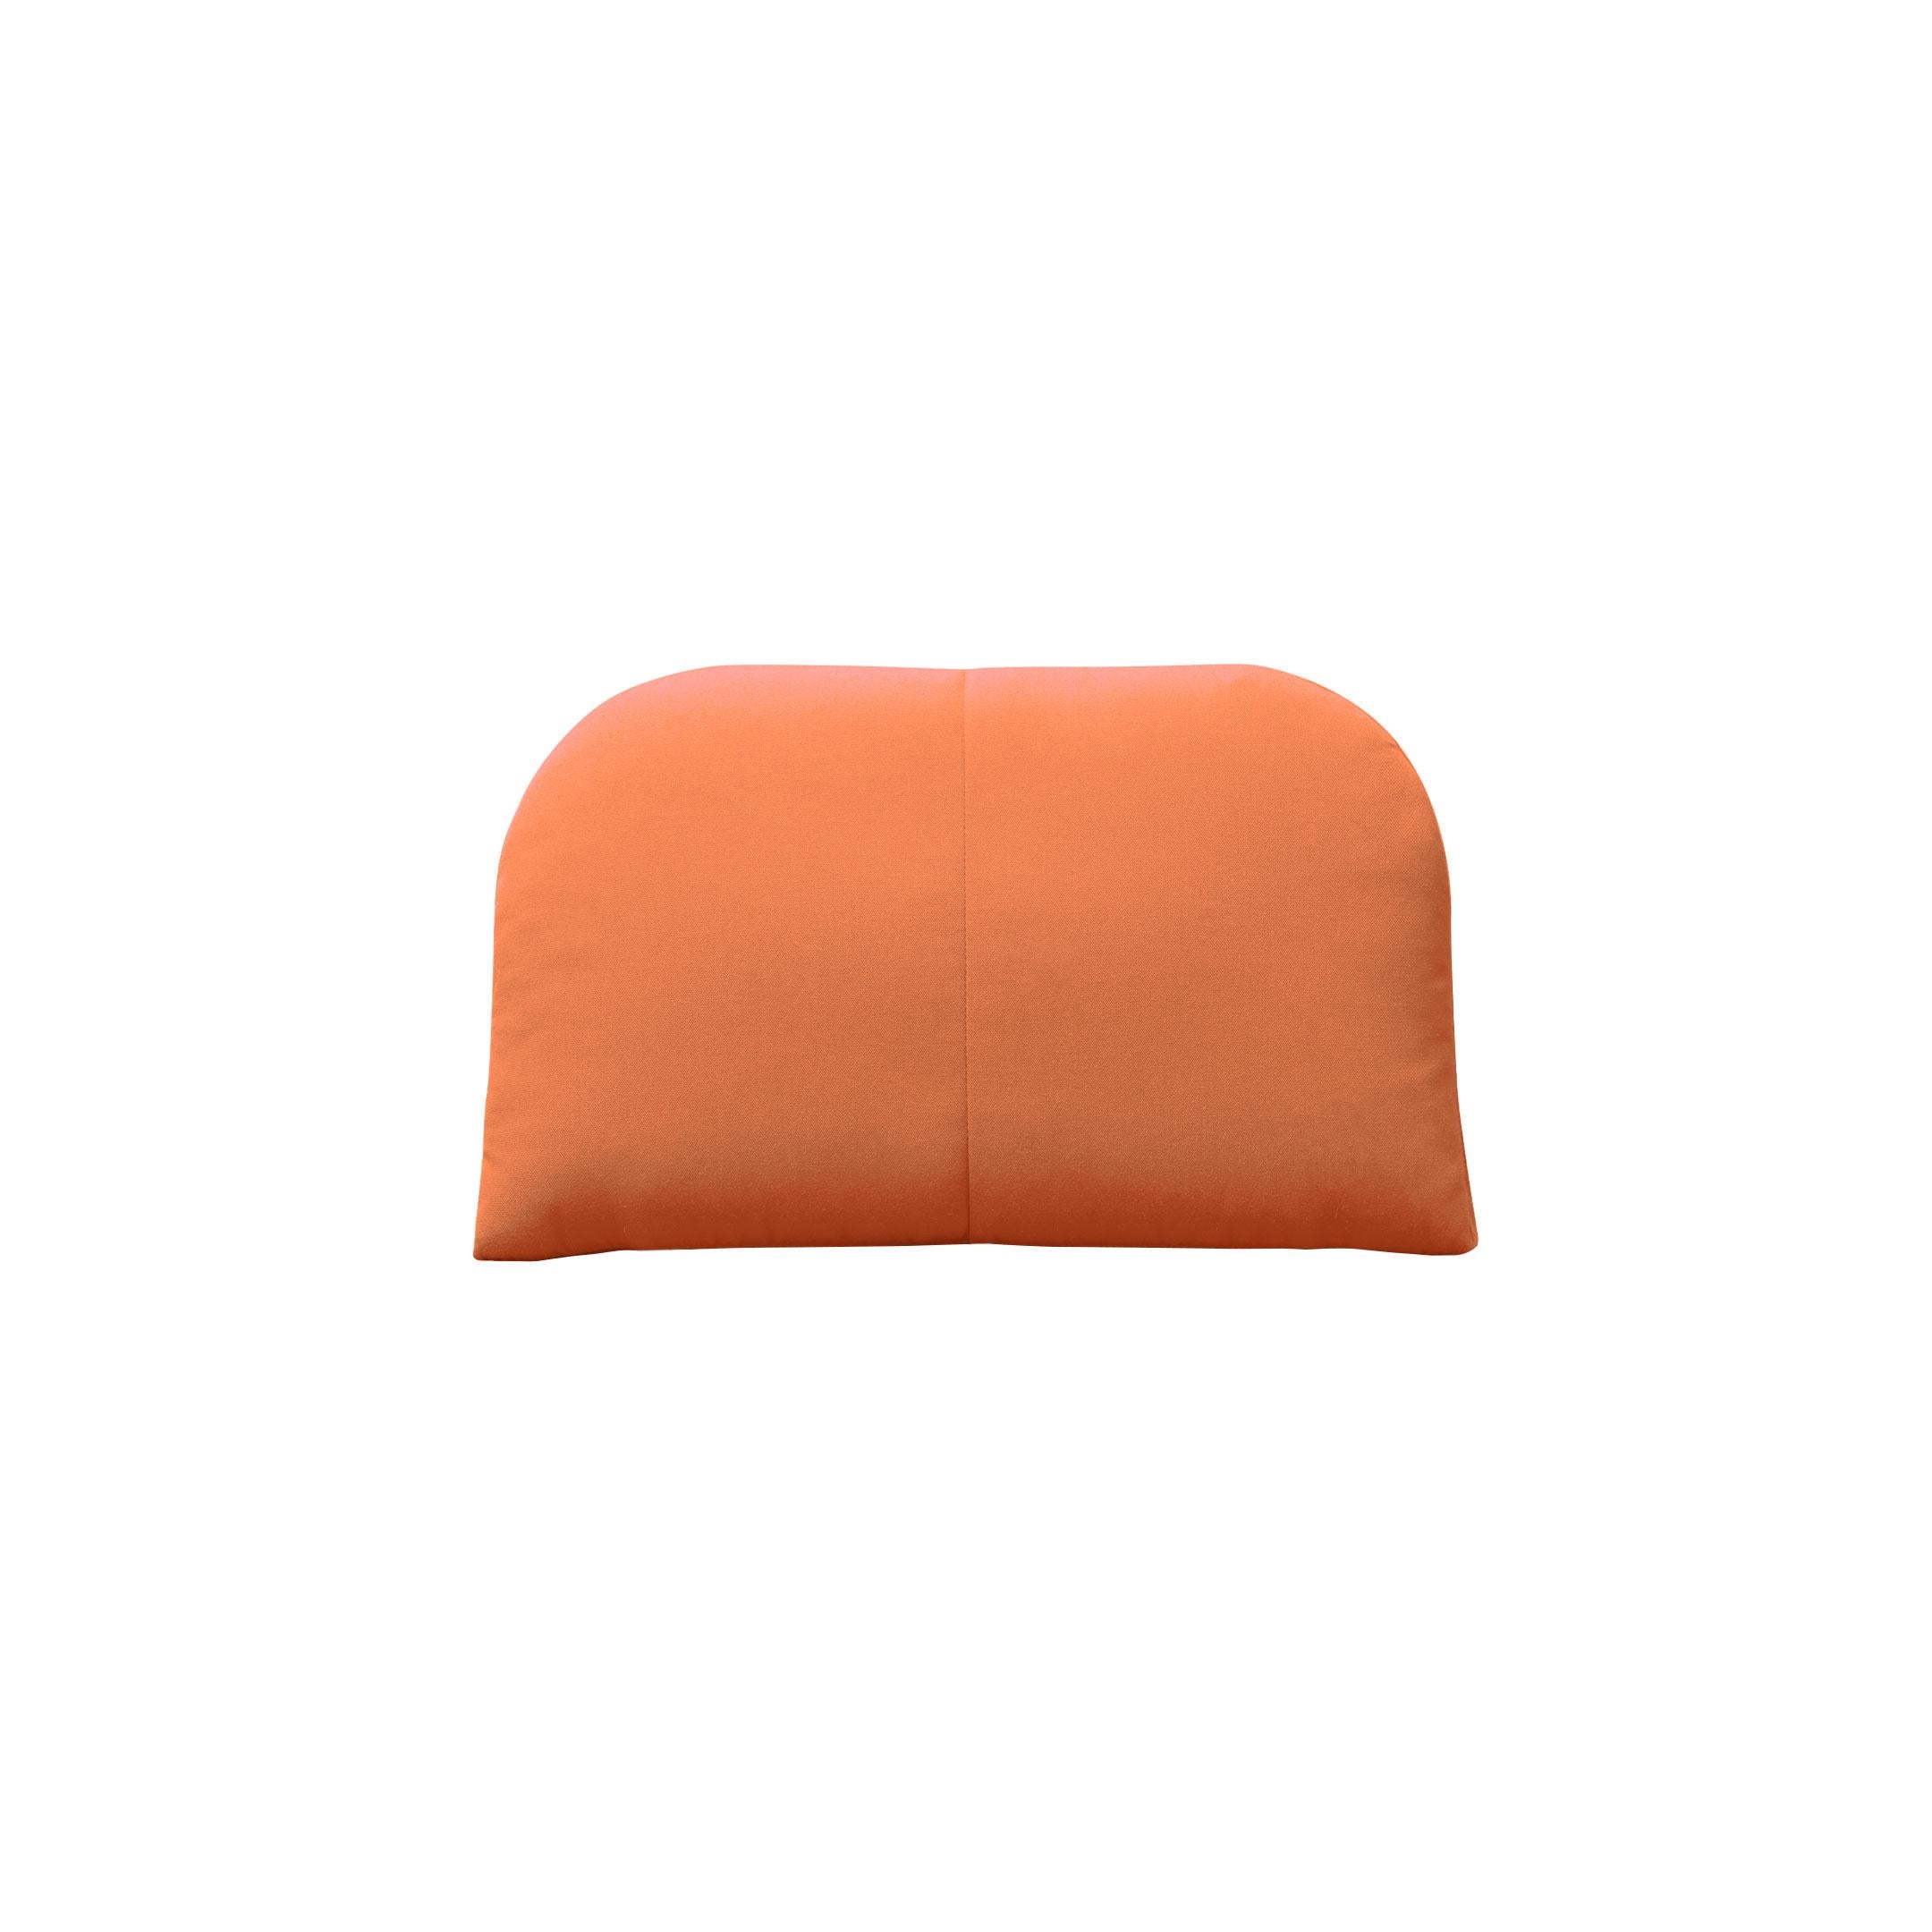 Bend Goods - Arc Throw Pillow in Aruba Sunbrella In New Condition For Sale In Ontario, CA